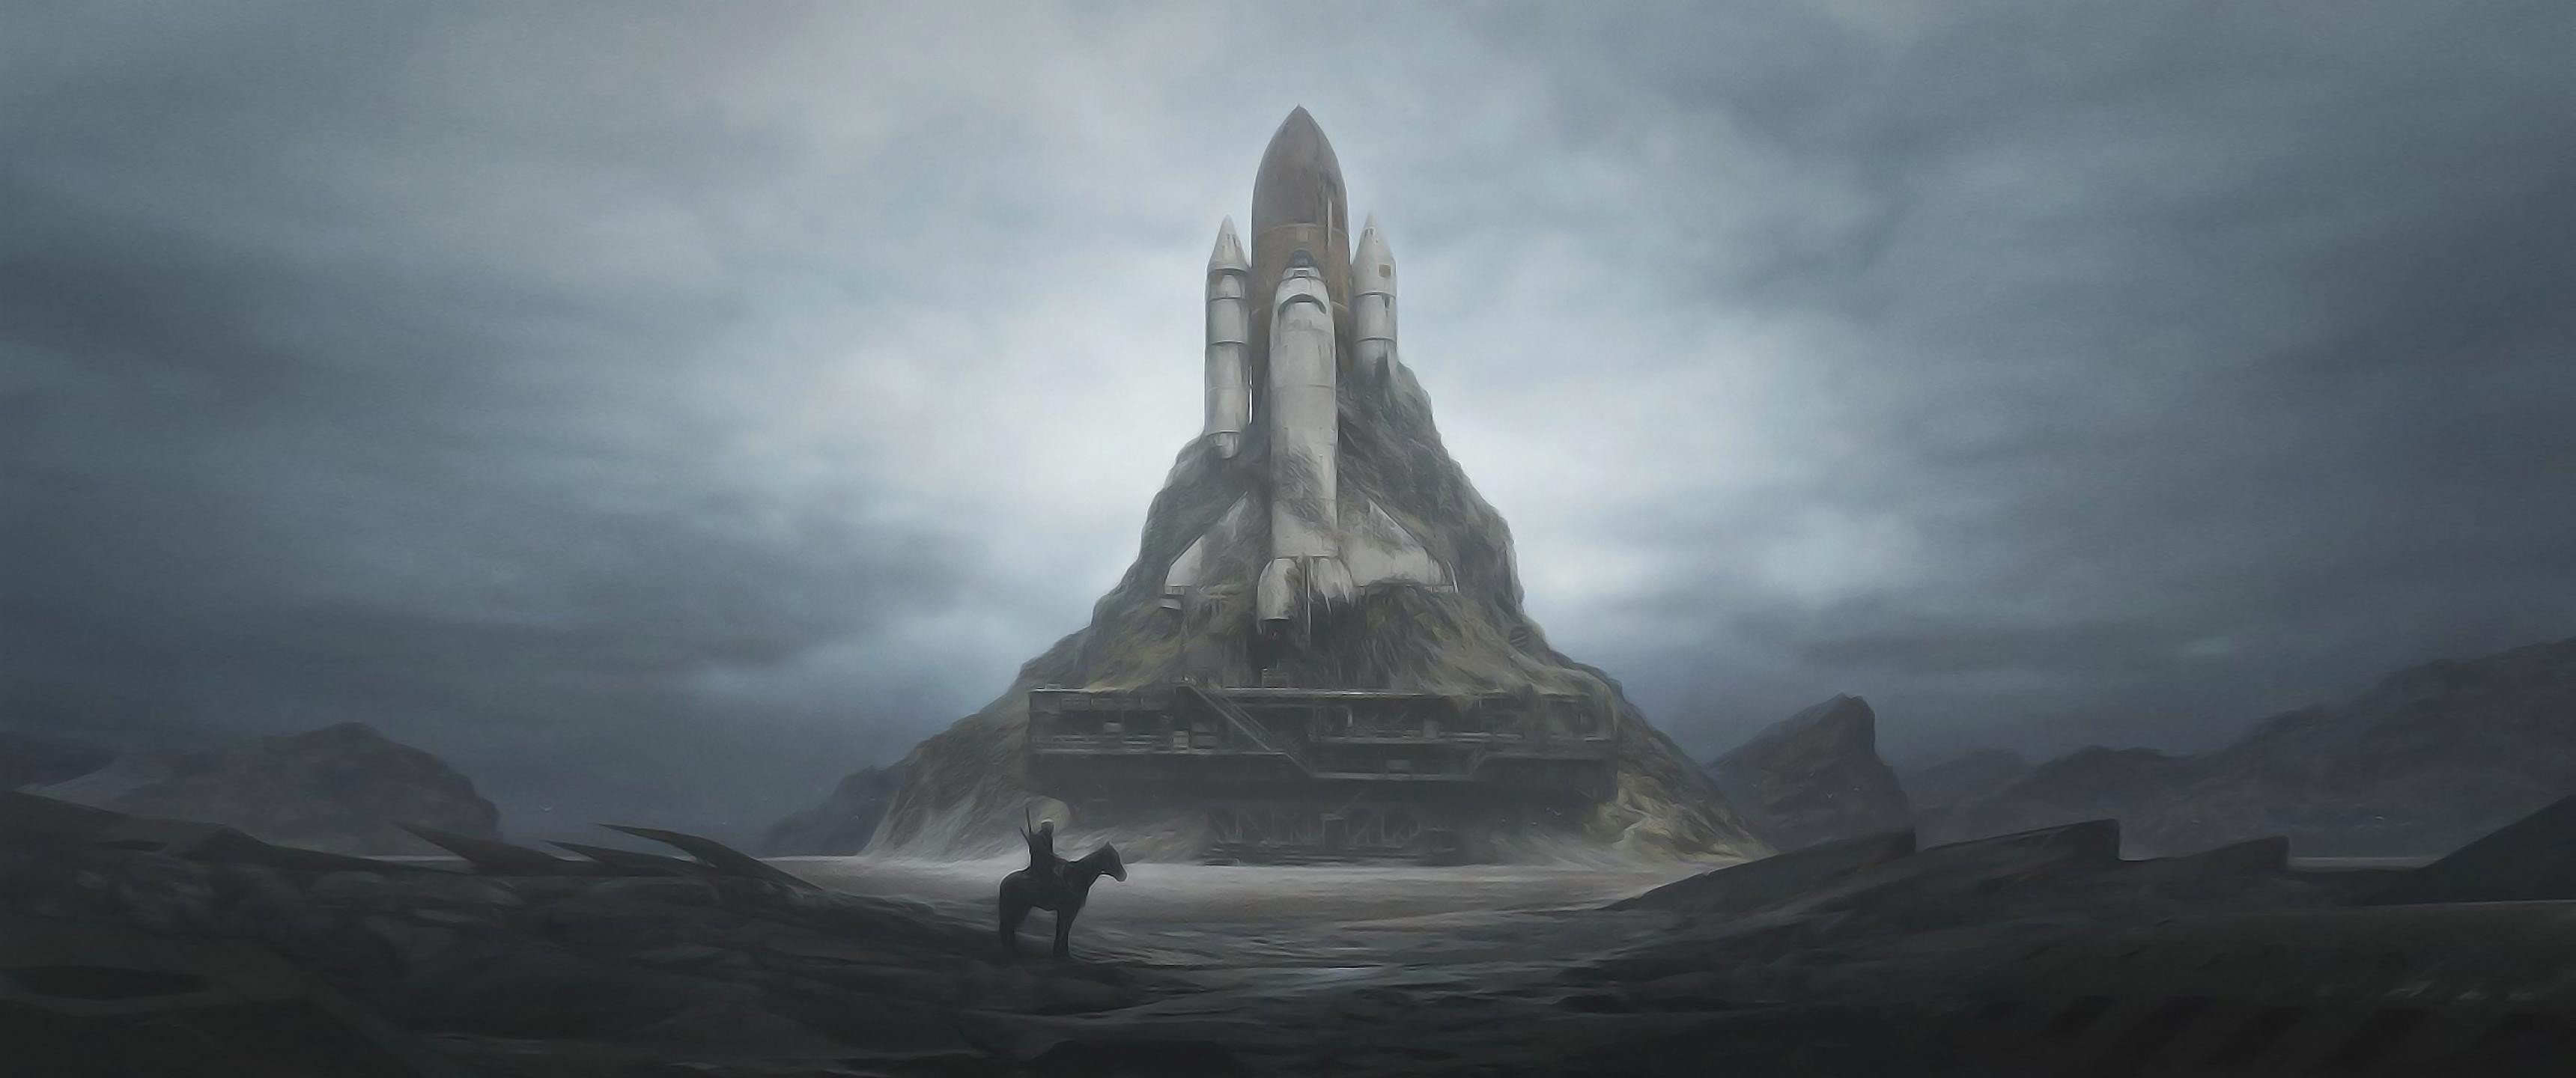 Sci Fi - Post Apocalyptic  Space Shuttle Landscape Sci Fi Wallpaper